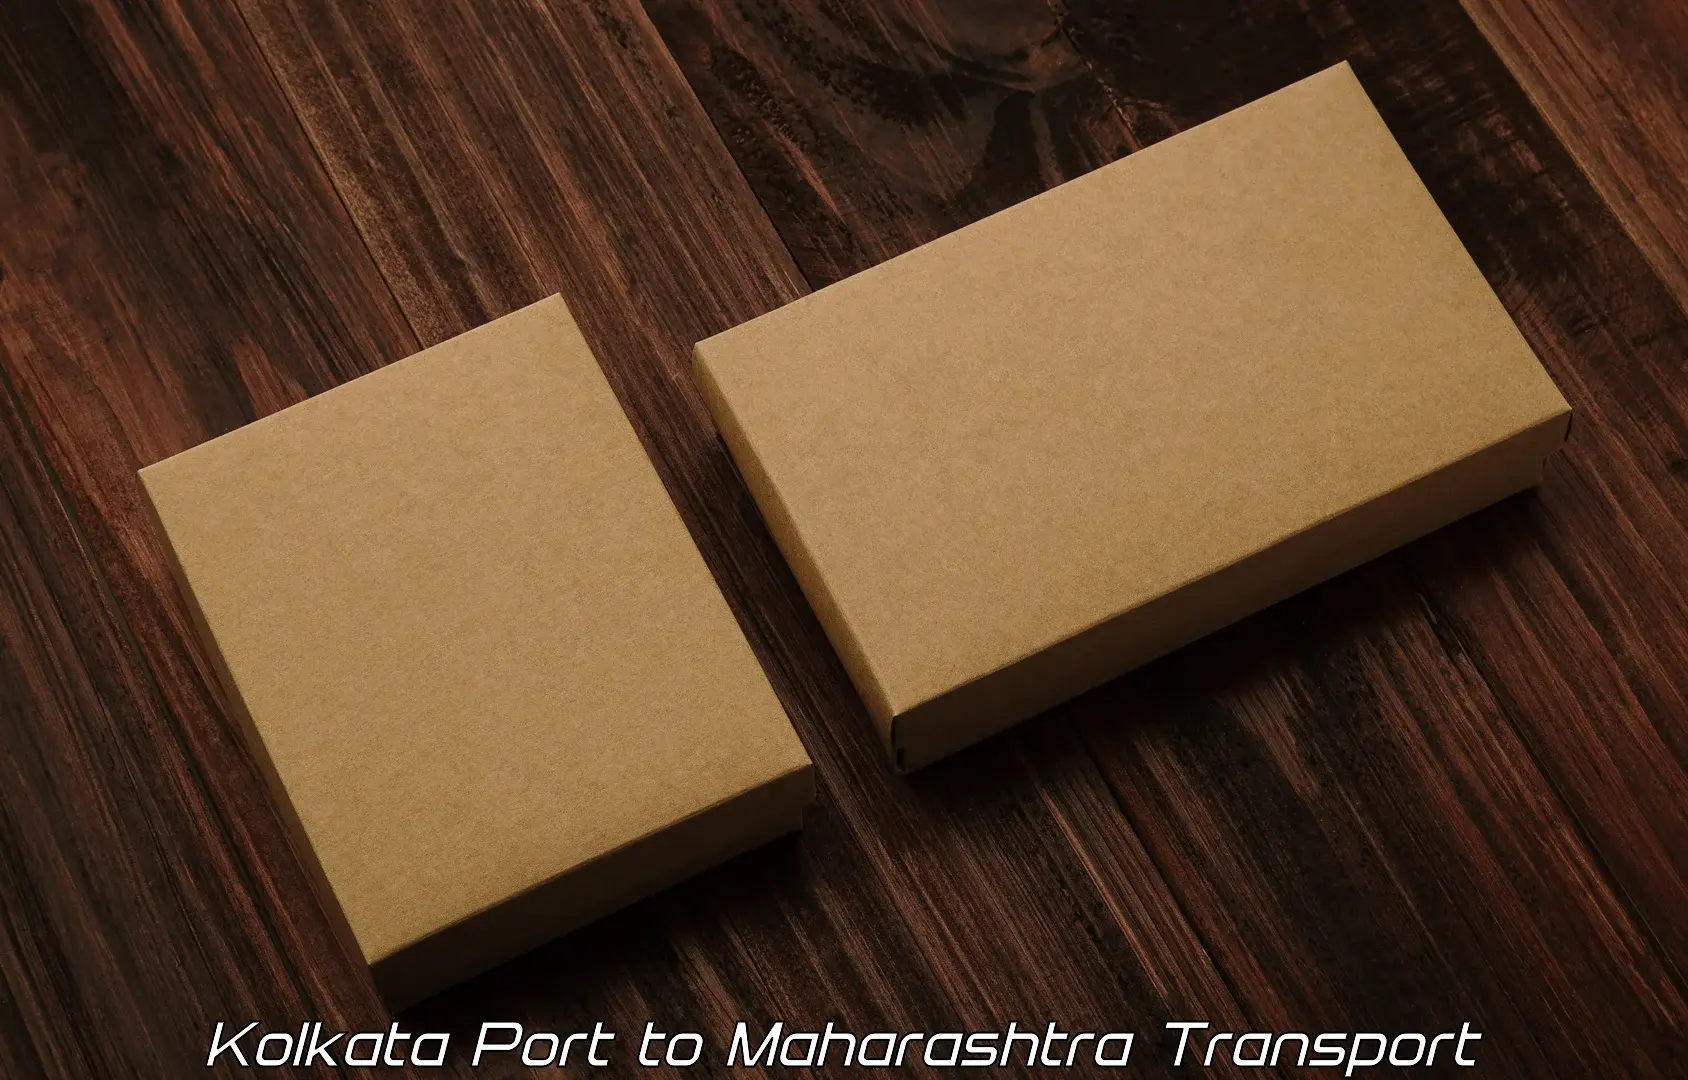 Part load transport service in India Kolkata Port to Kandhar